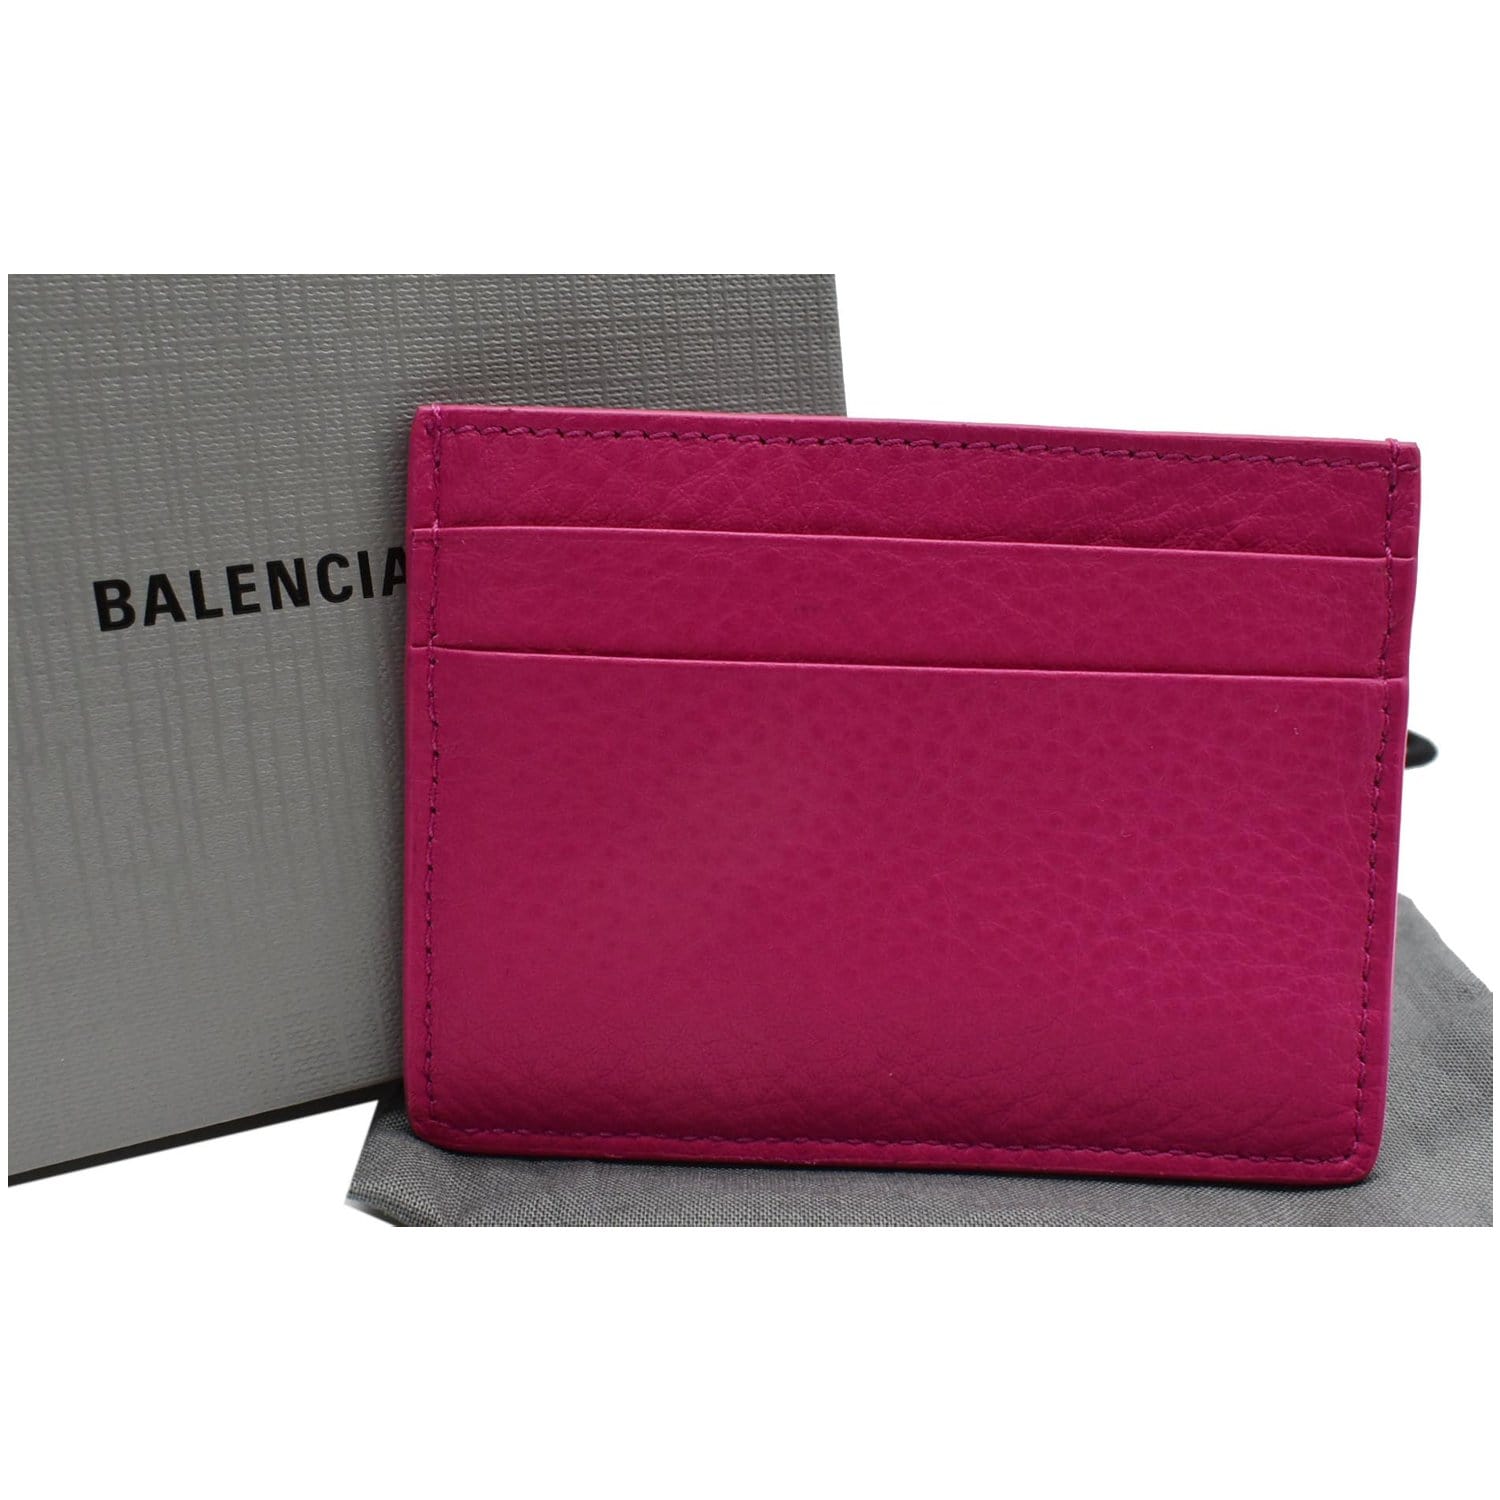 Balenciaga Business Card Holder Wallet Pink